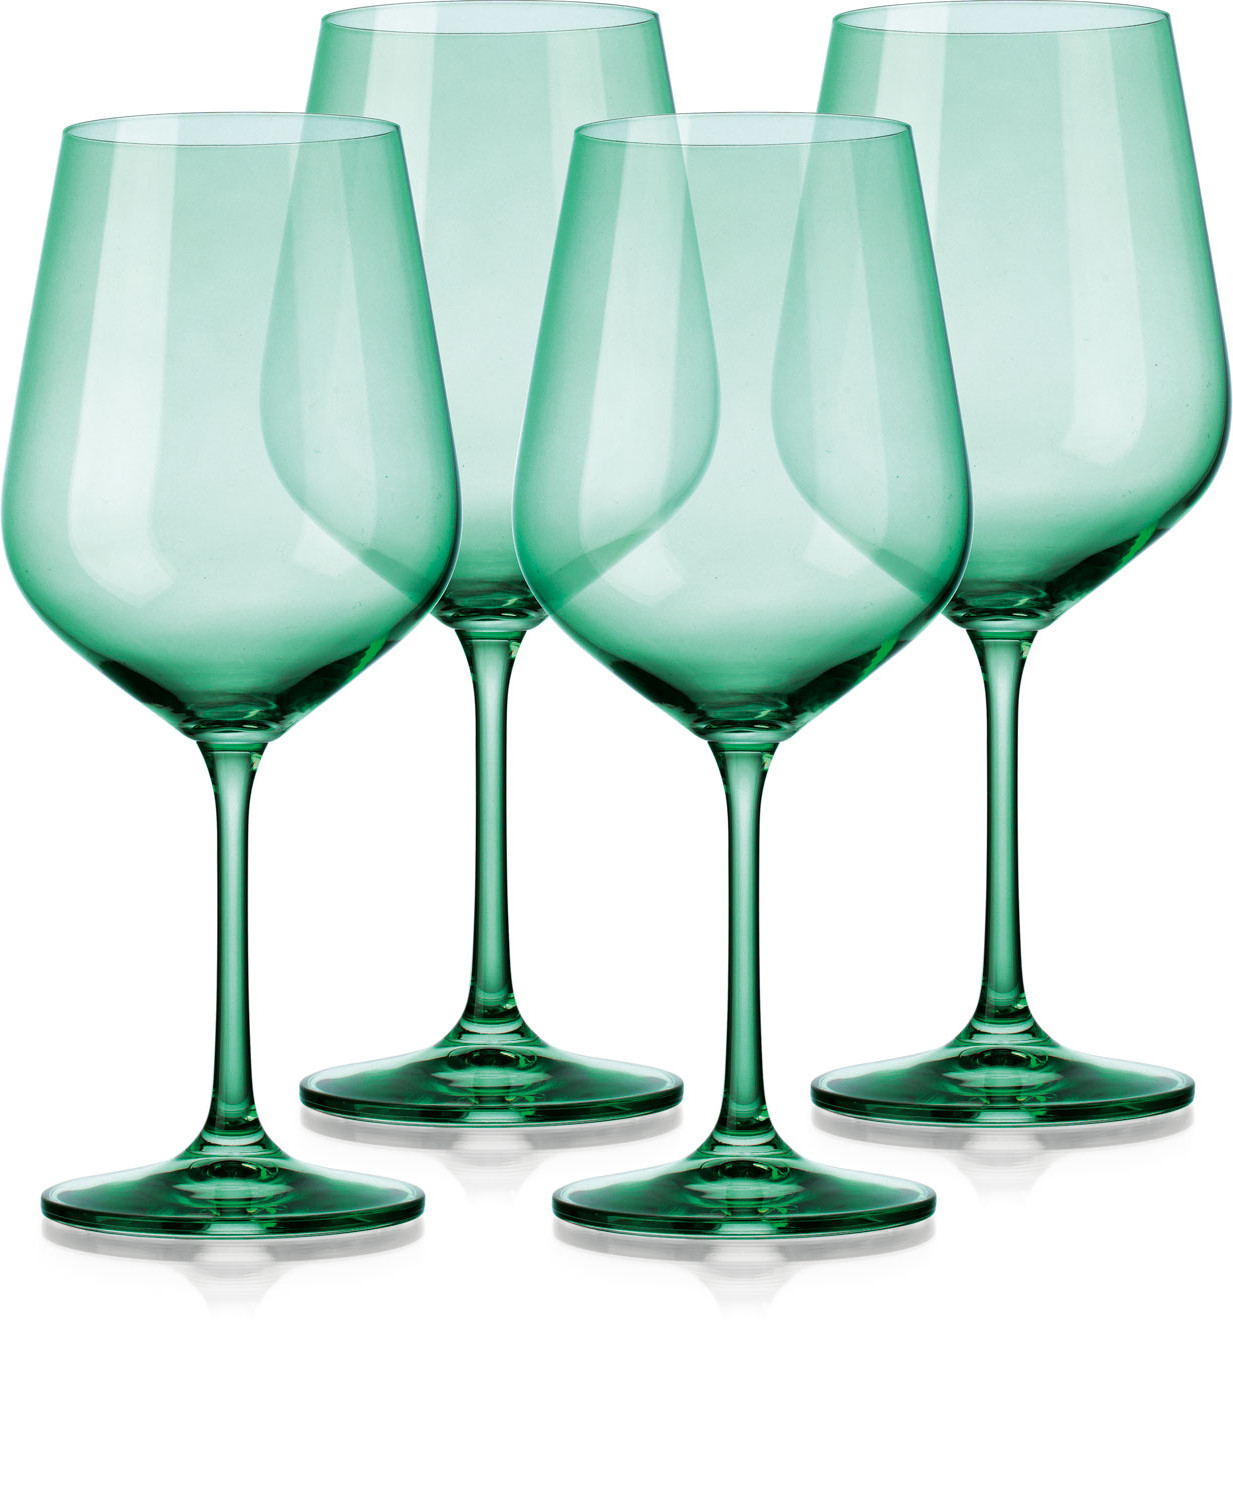 Set of Four Translucent Pale Green Large Wine Glasses